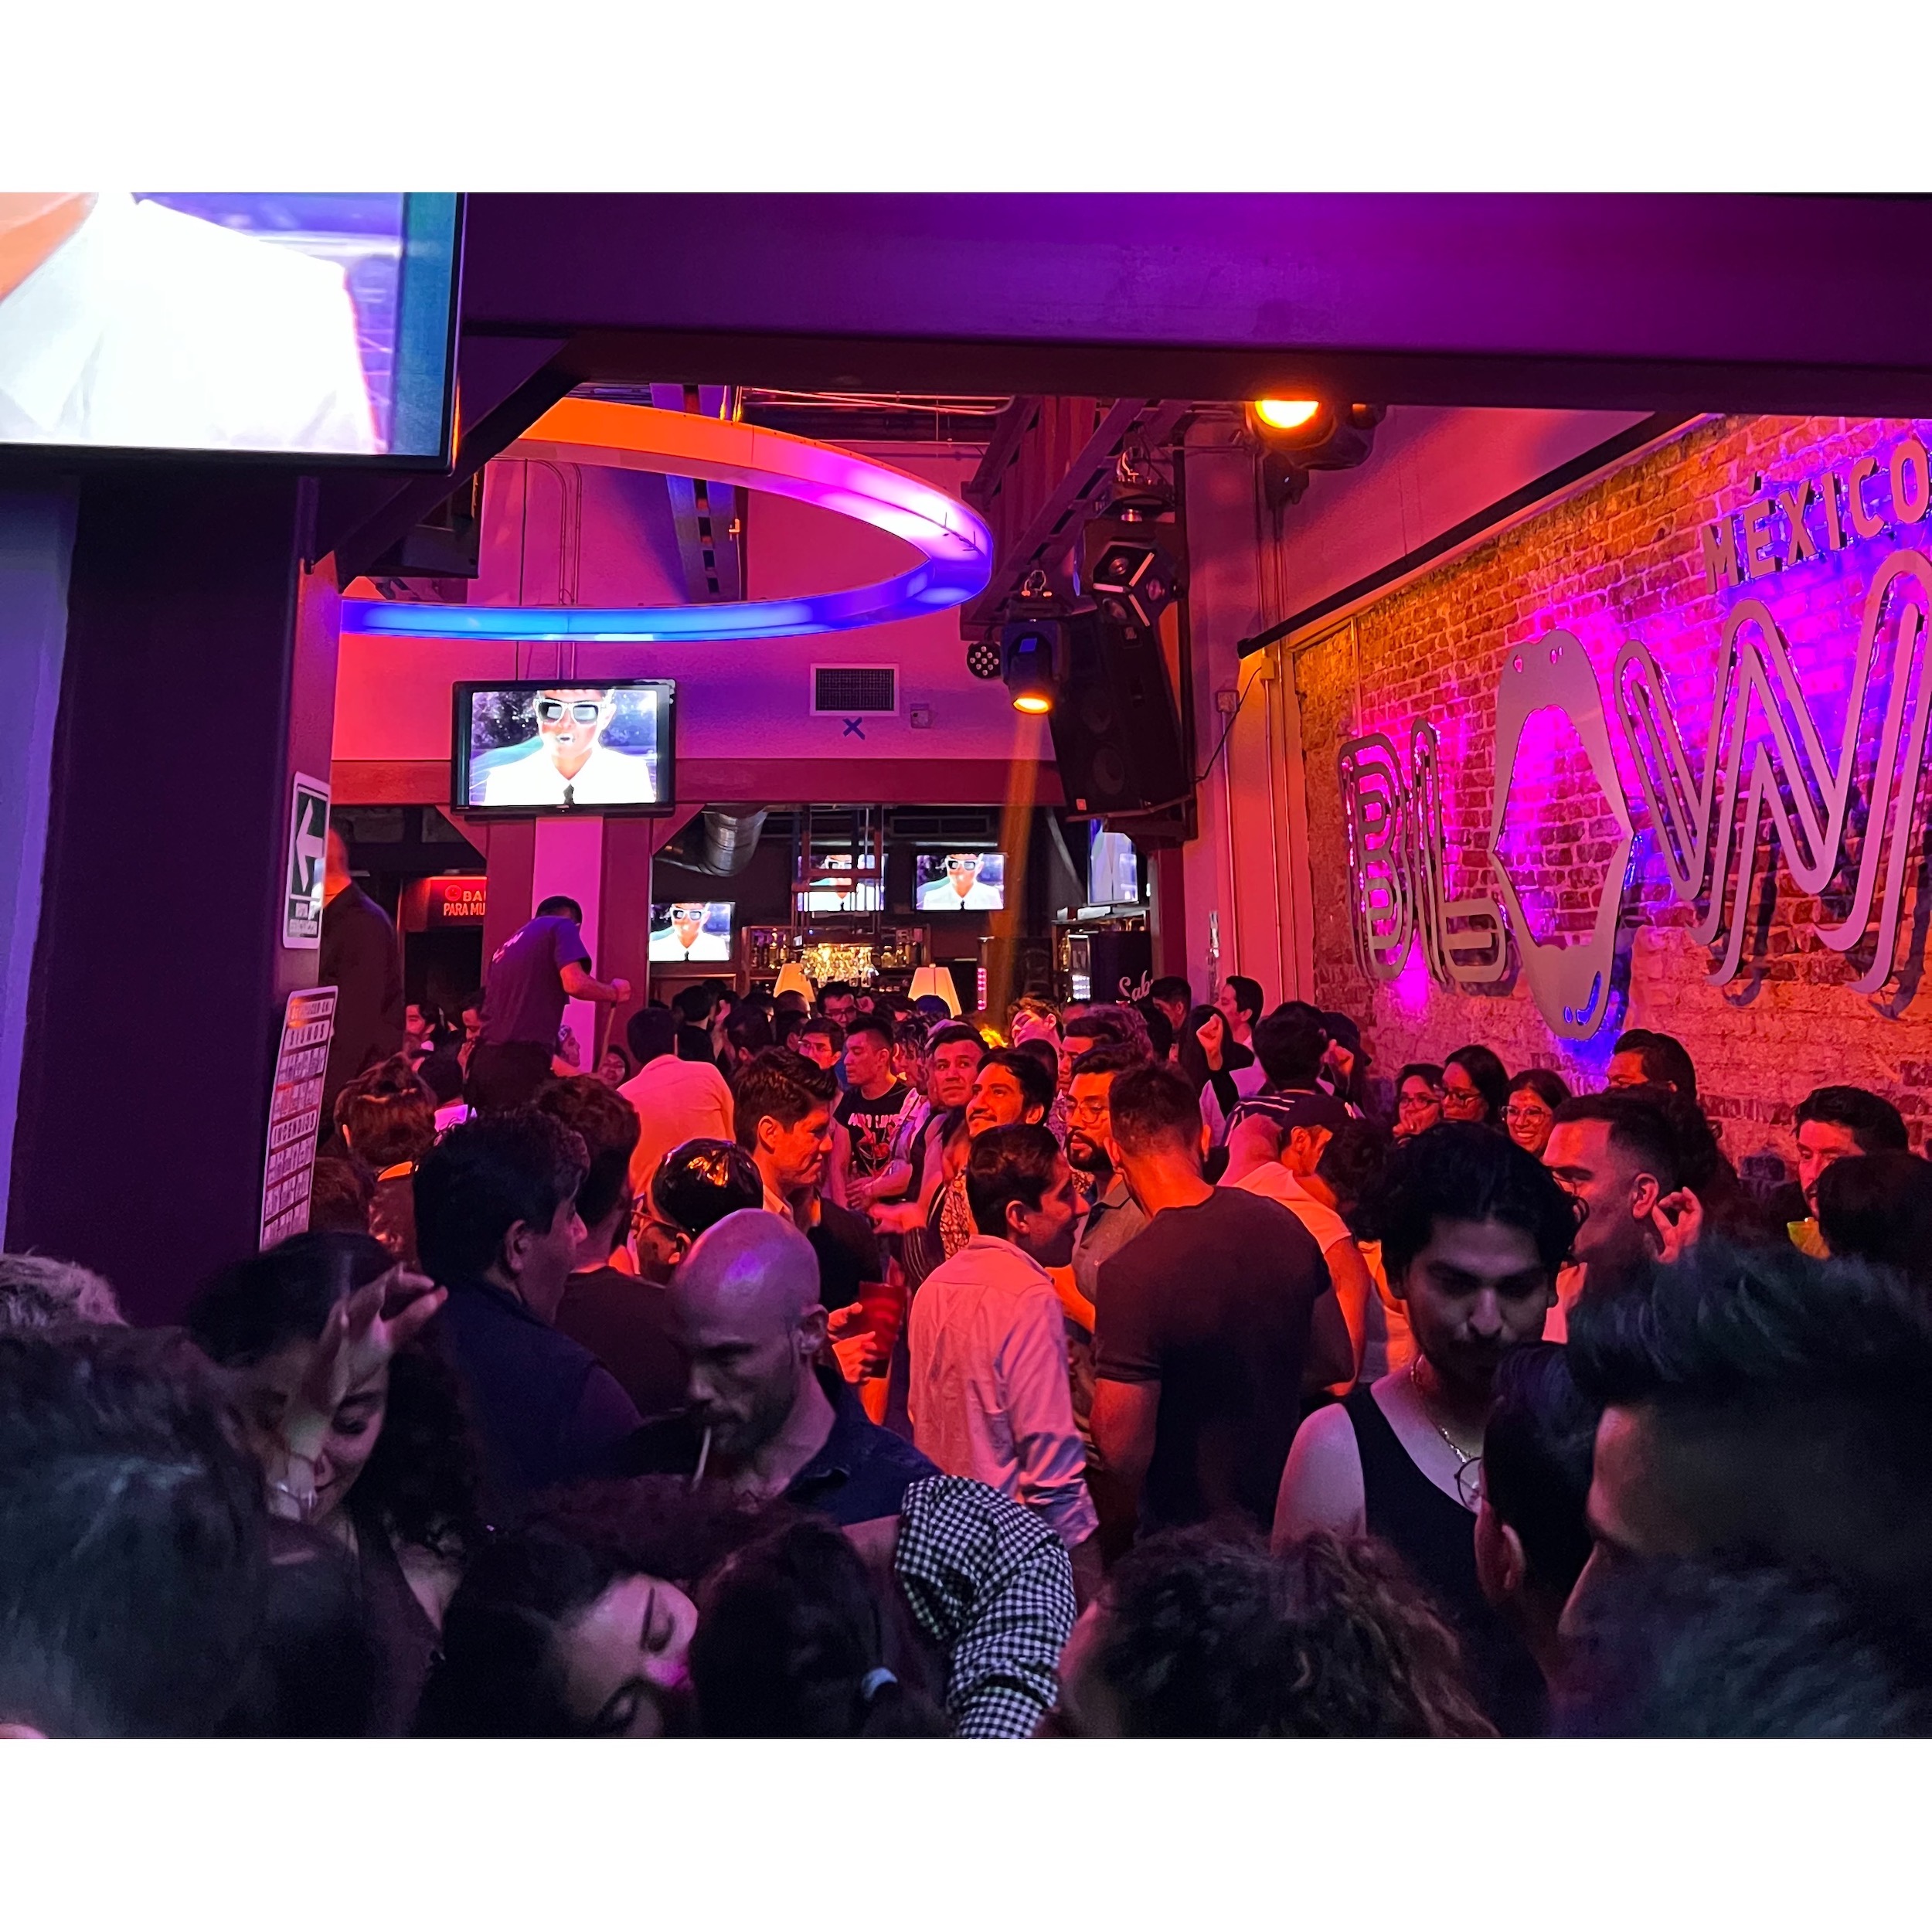 inside mexico city's best gay bar